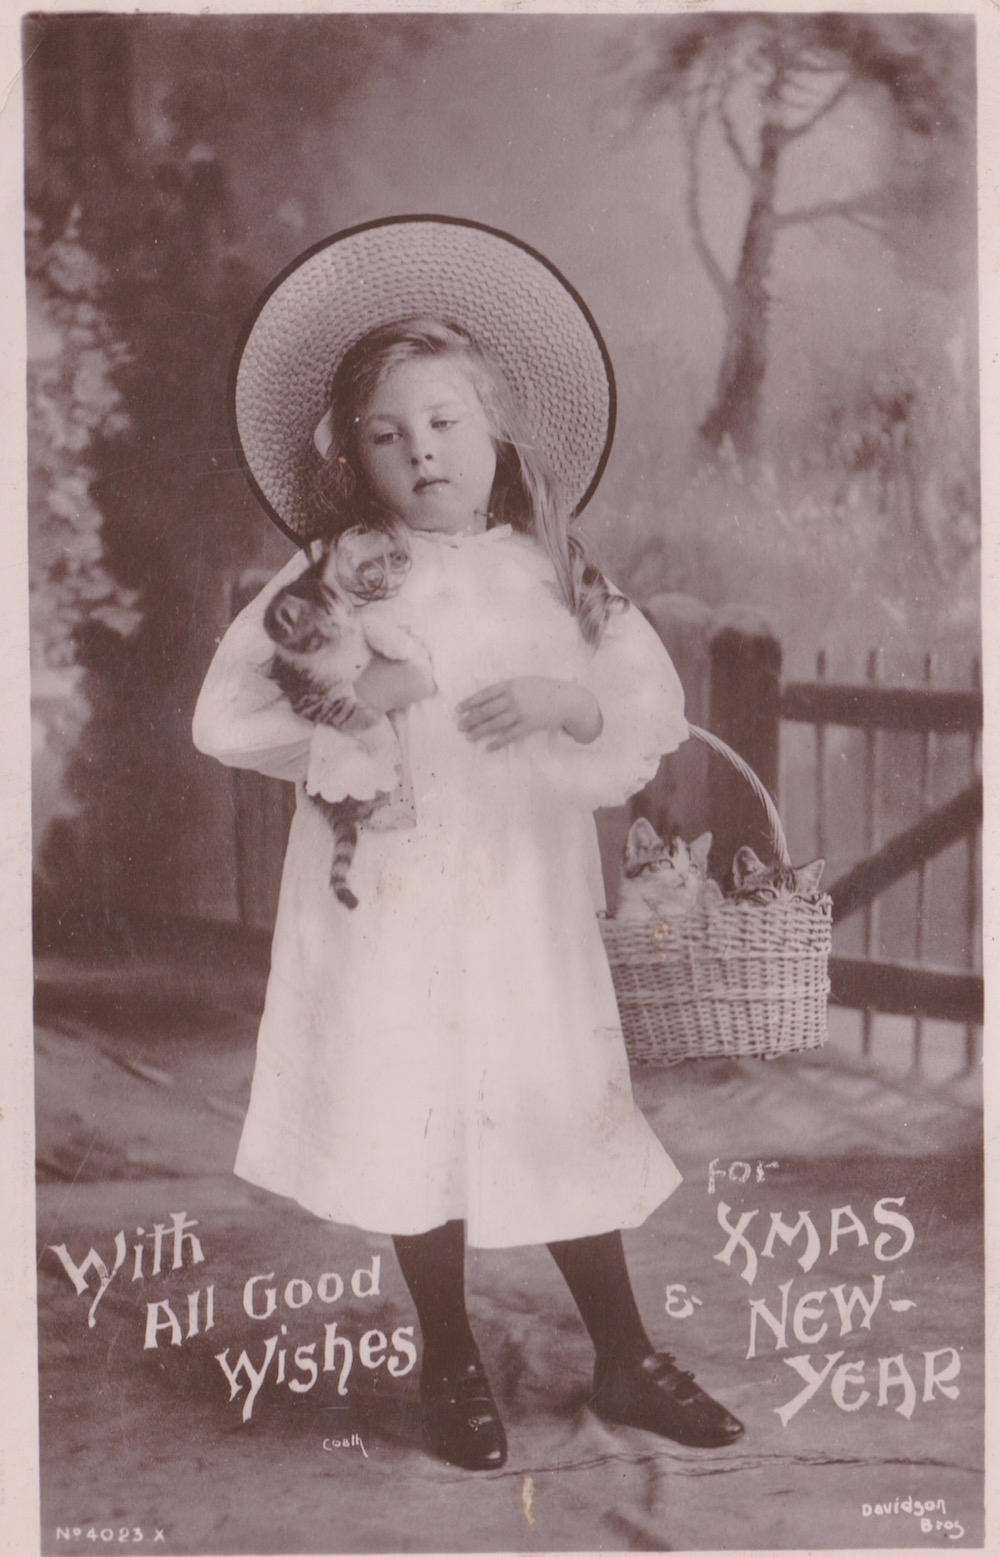 Davidson Bros 'Real Photographic' series Dec 1906 wishing Mrs Harding a merry xmas